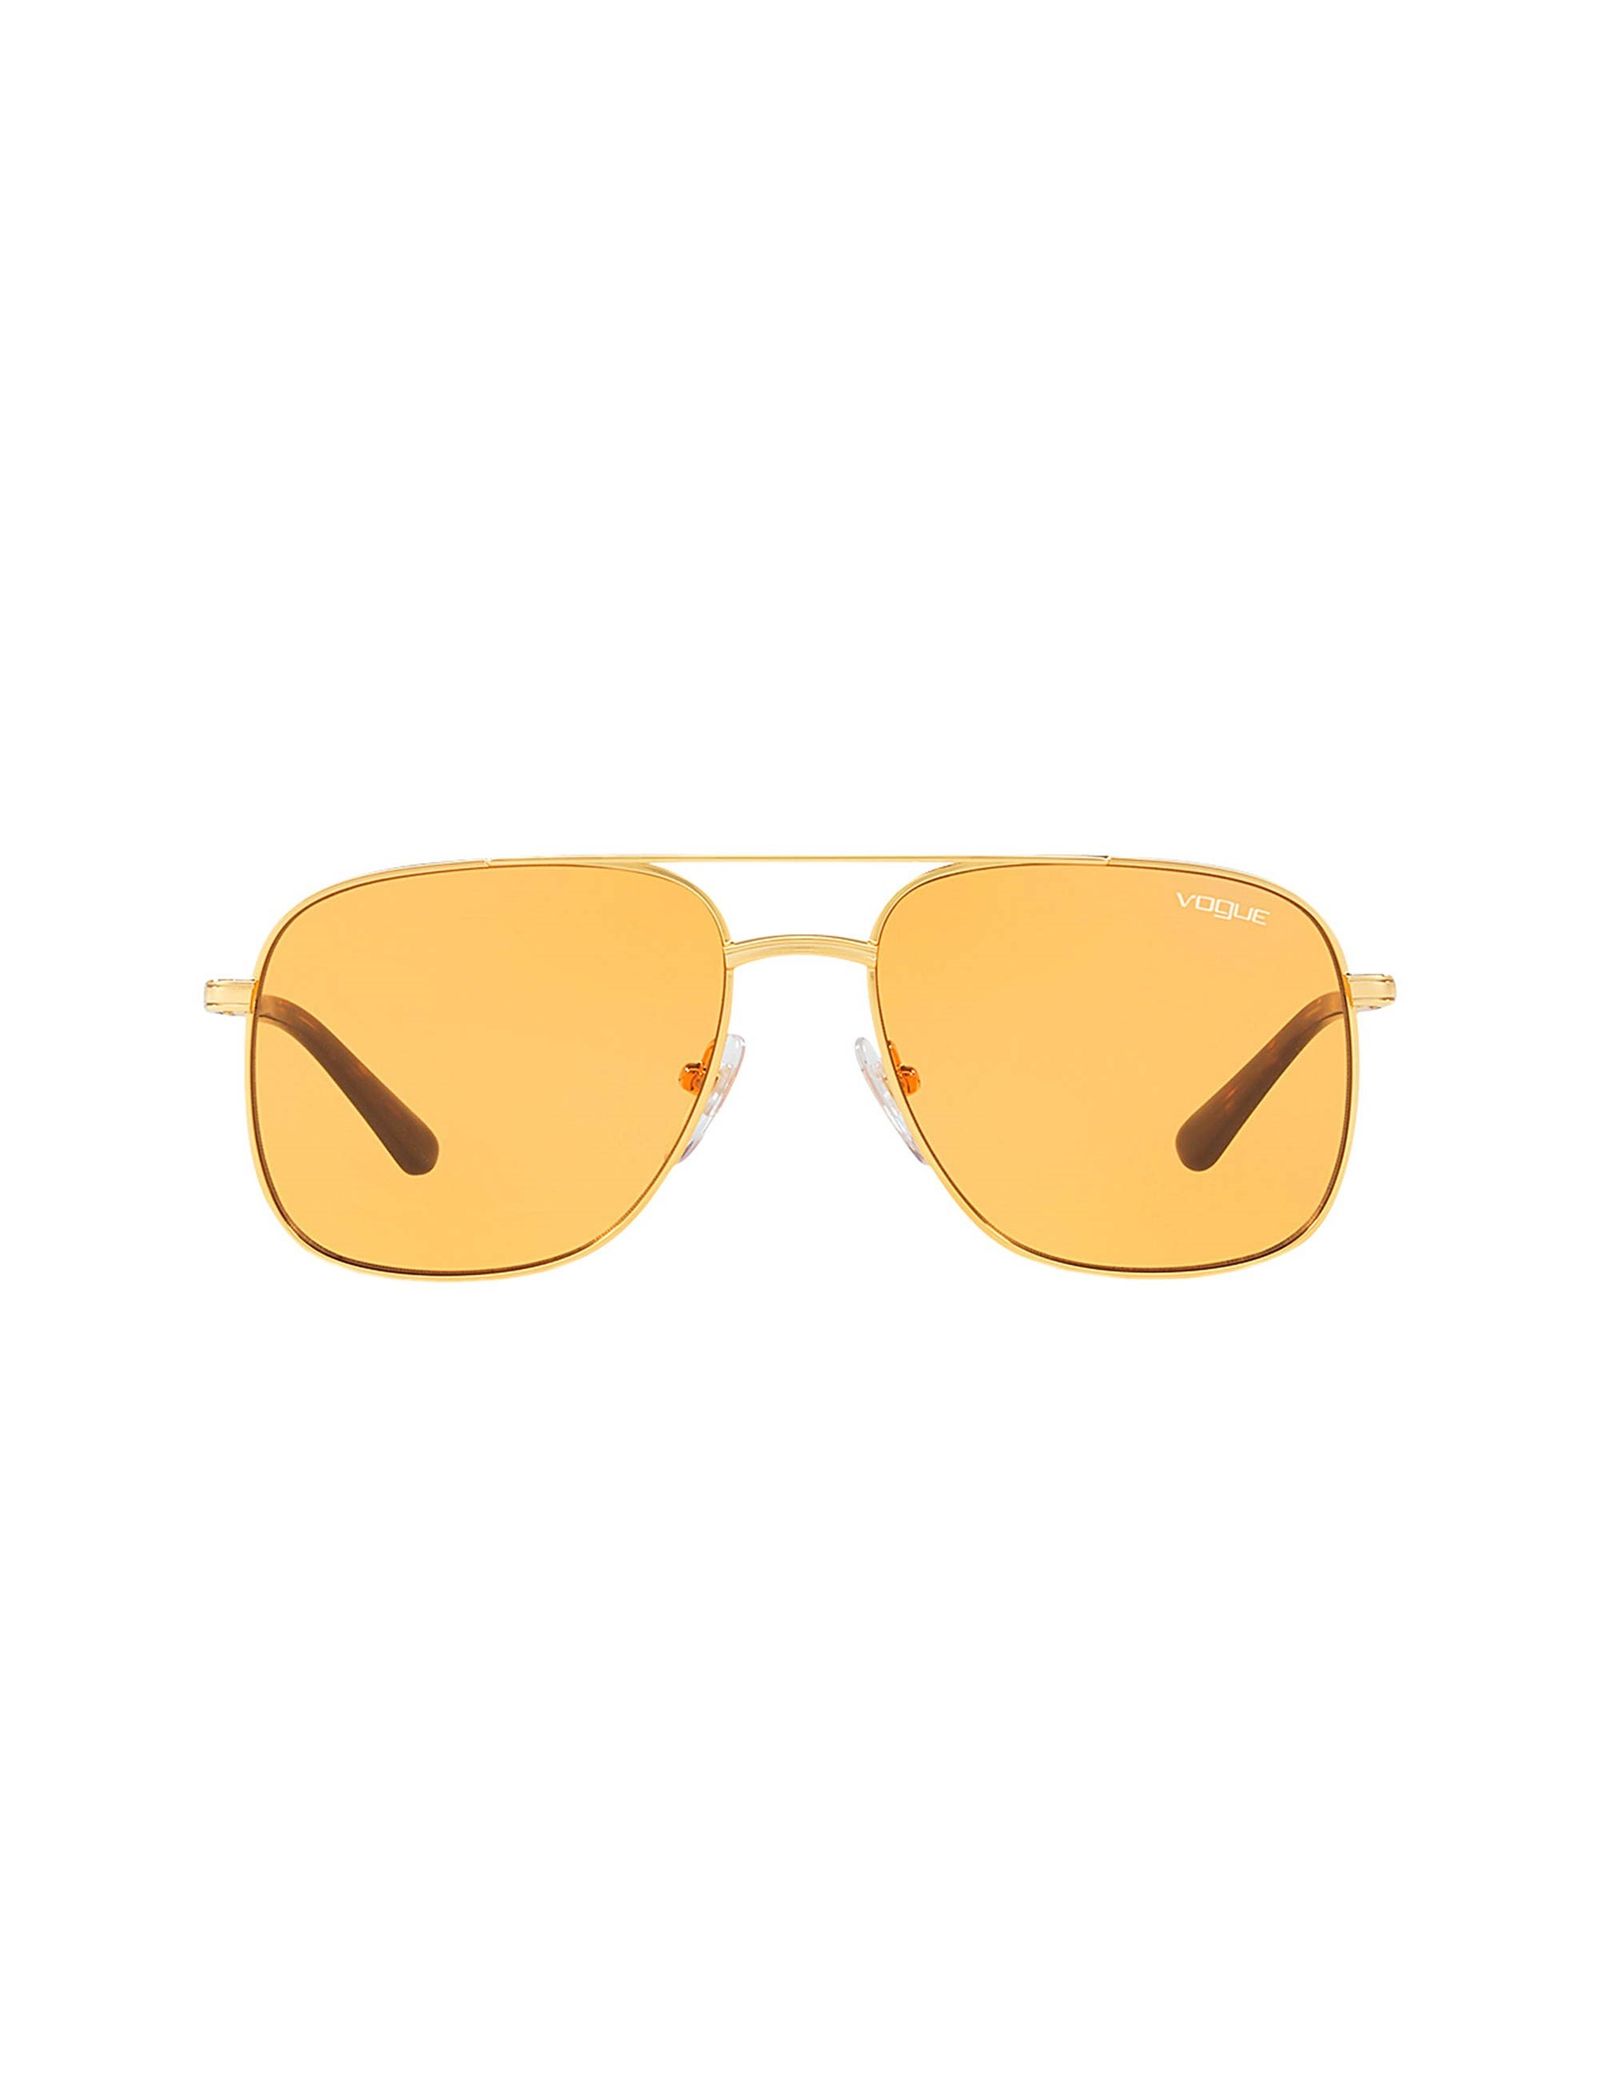 عینک آفتابی خلبانی زنانه - ووگ - طلايي - 2